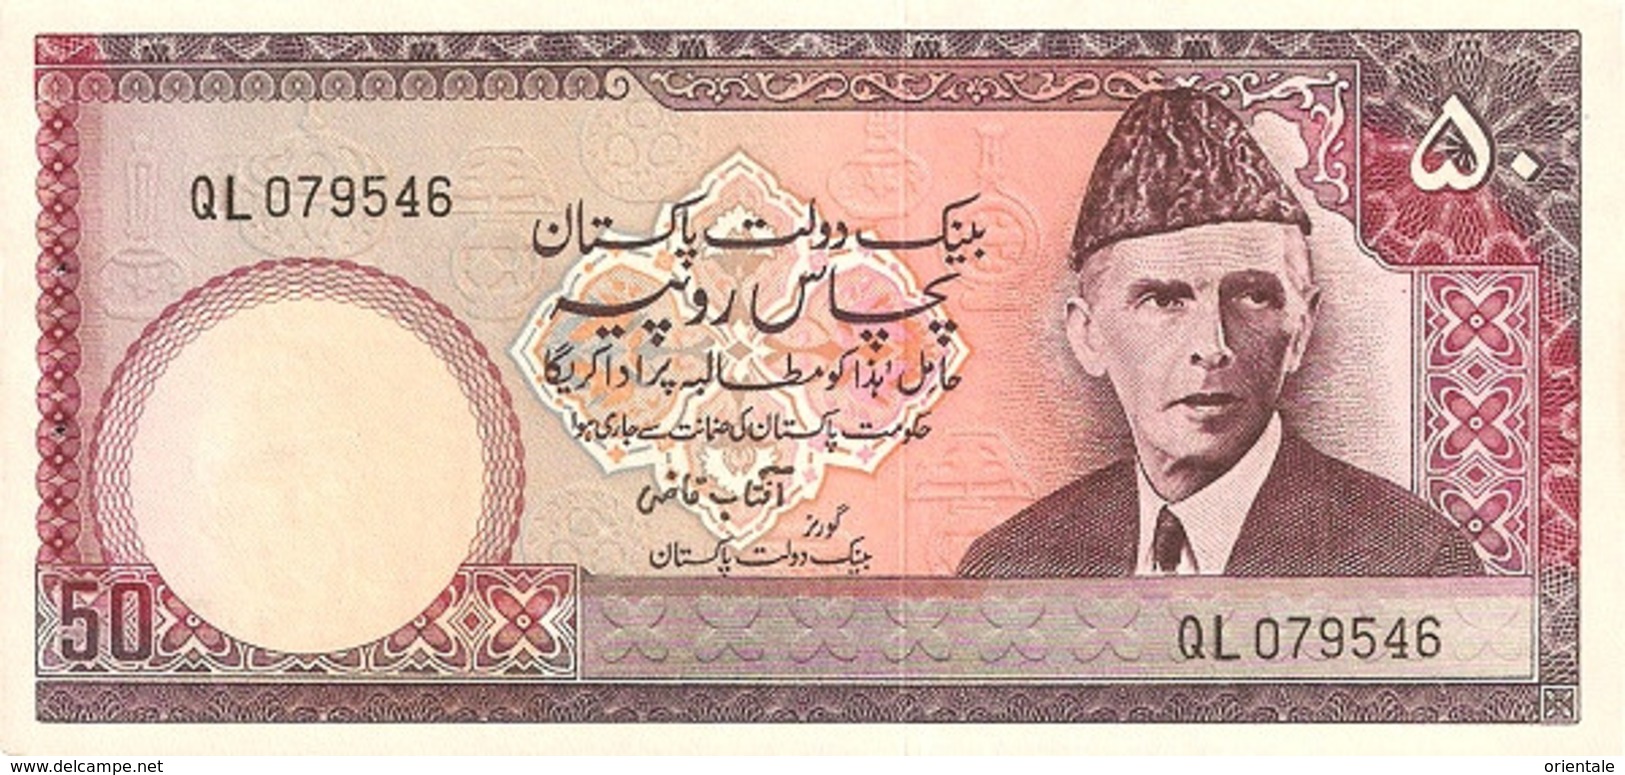 PAKISTAN P. 35 50 R 1985 UNC - Pakistan